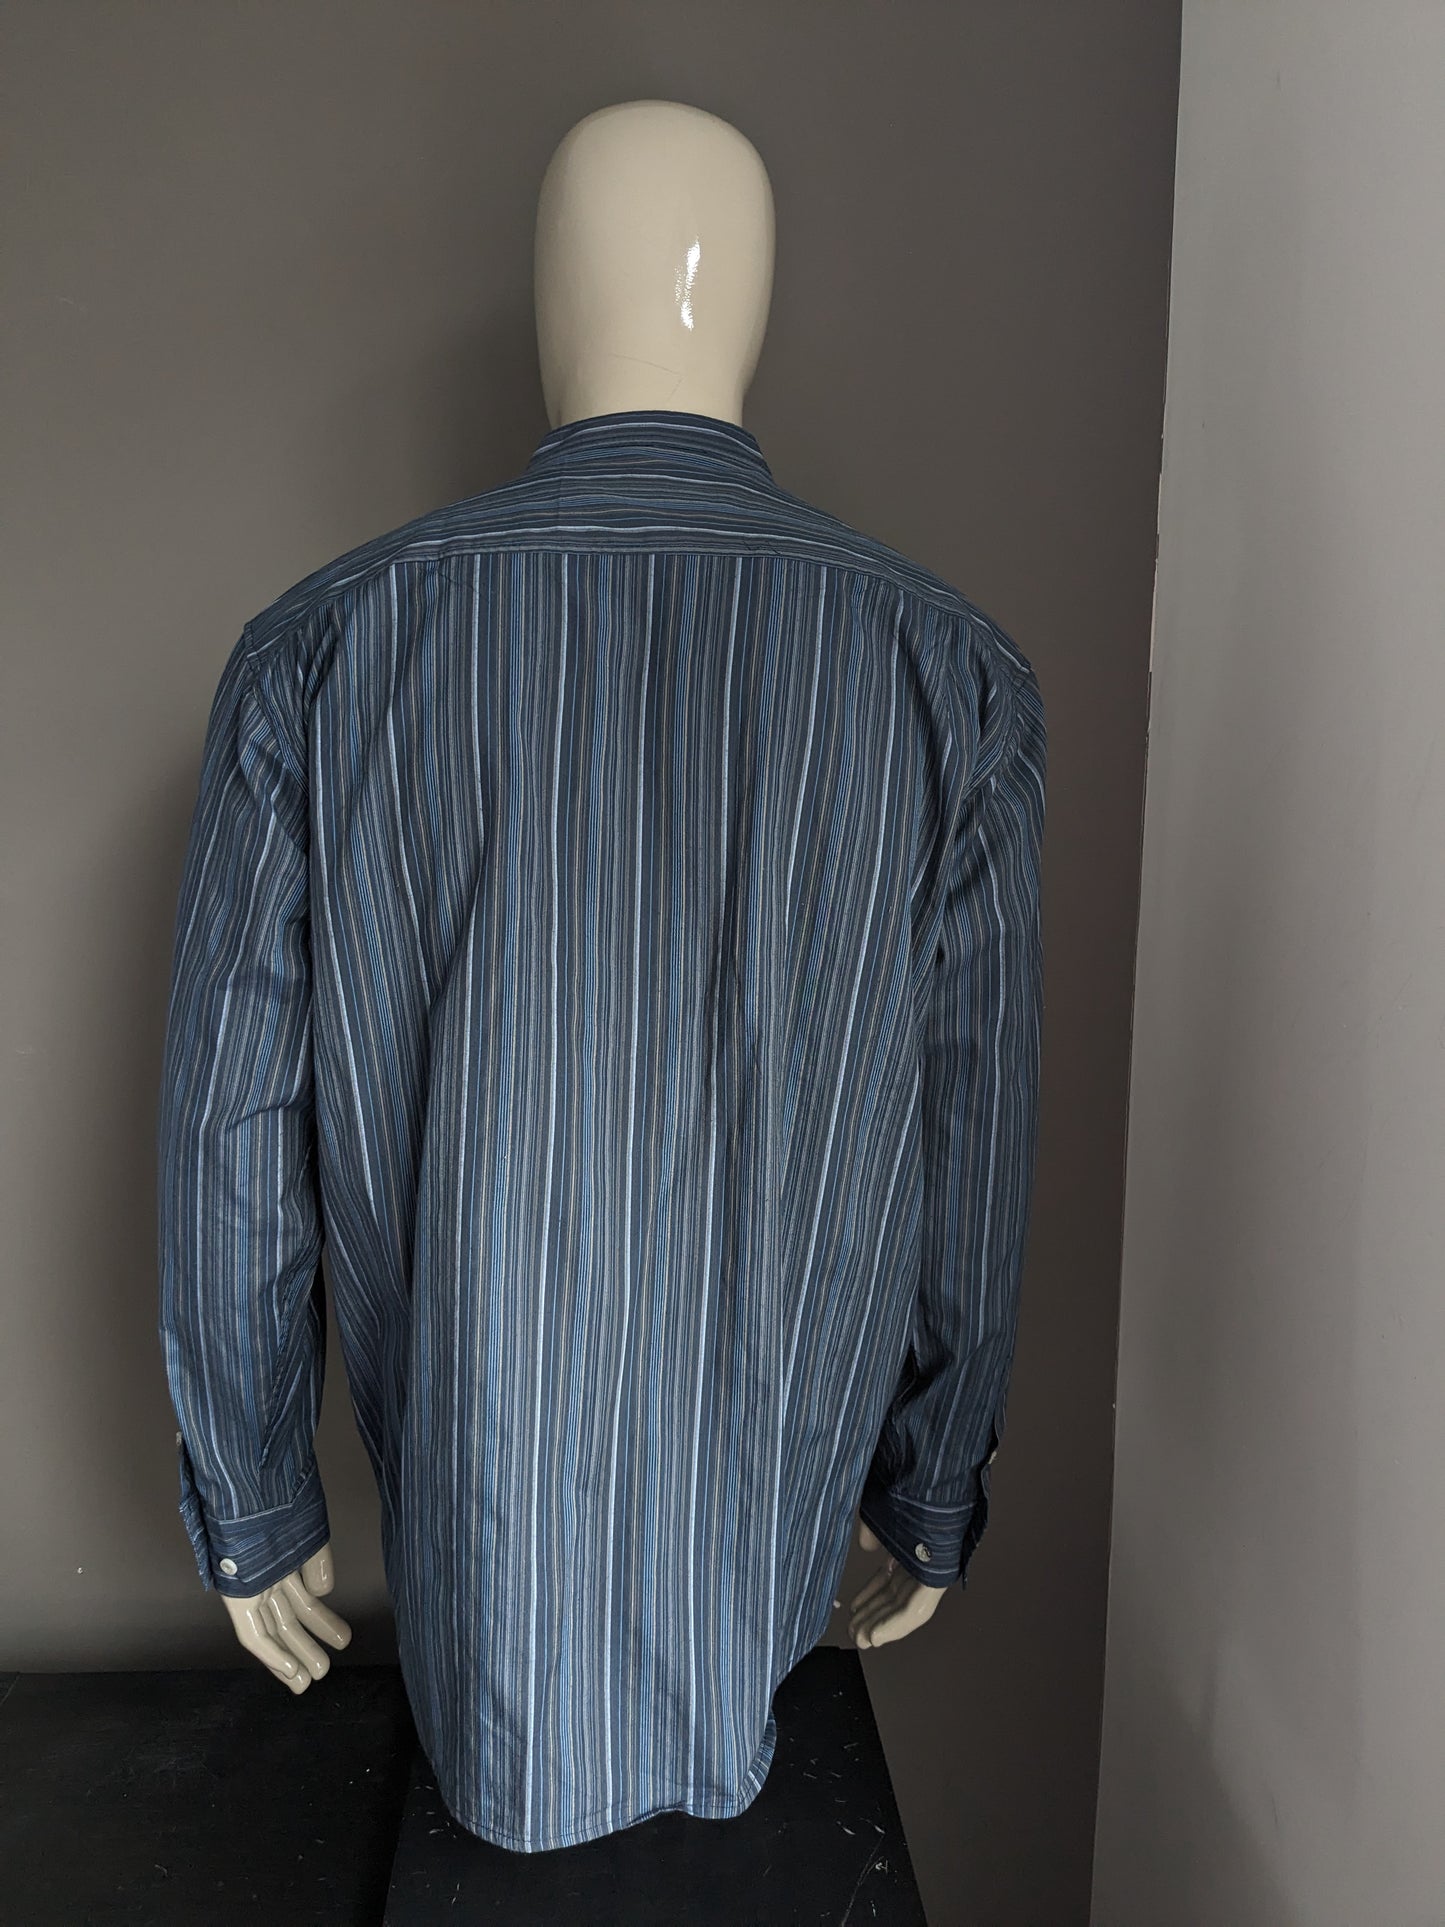 Atlas For Men Shirt Shirt with Rentight / Farmers / Mao Collar. Brun bleu rayé. Taille 2xl / xxl.